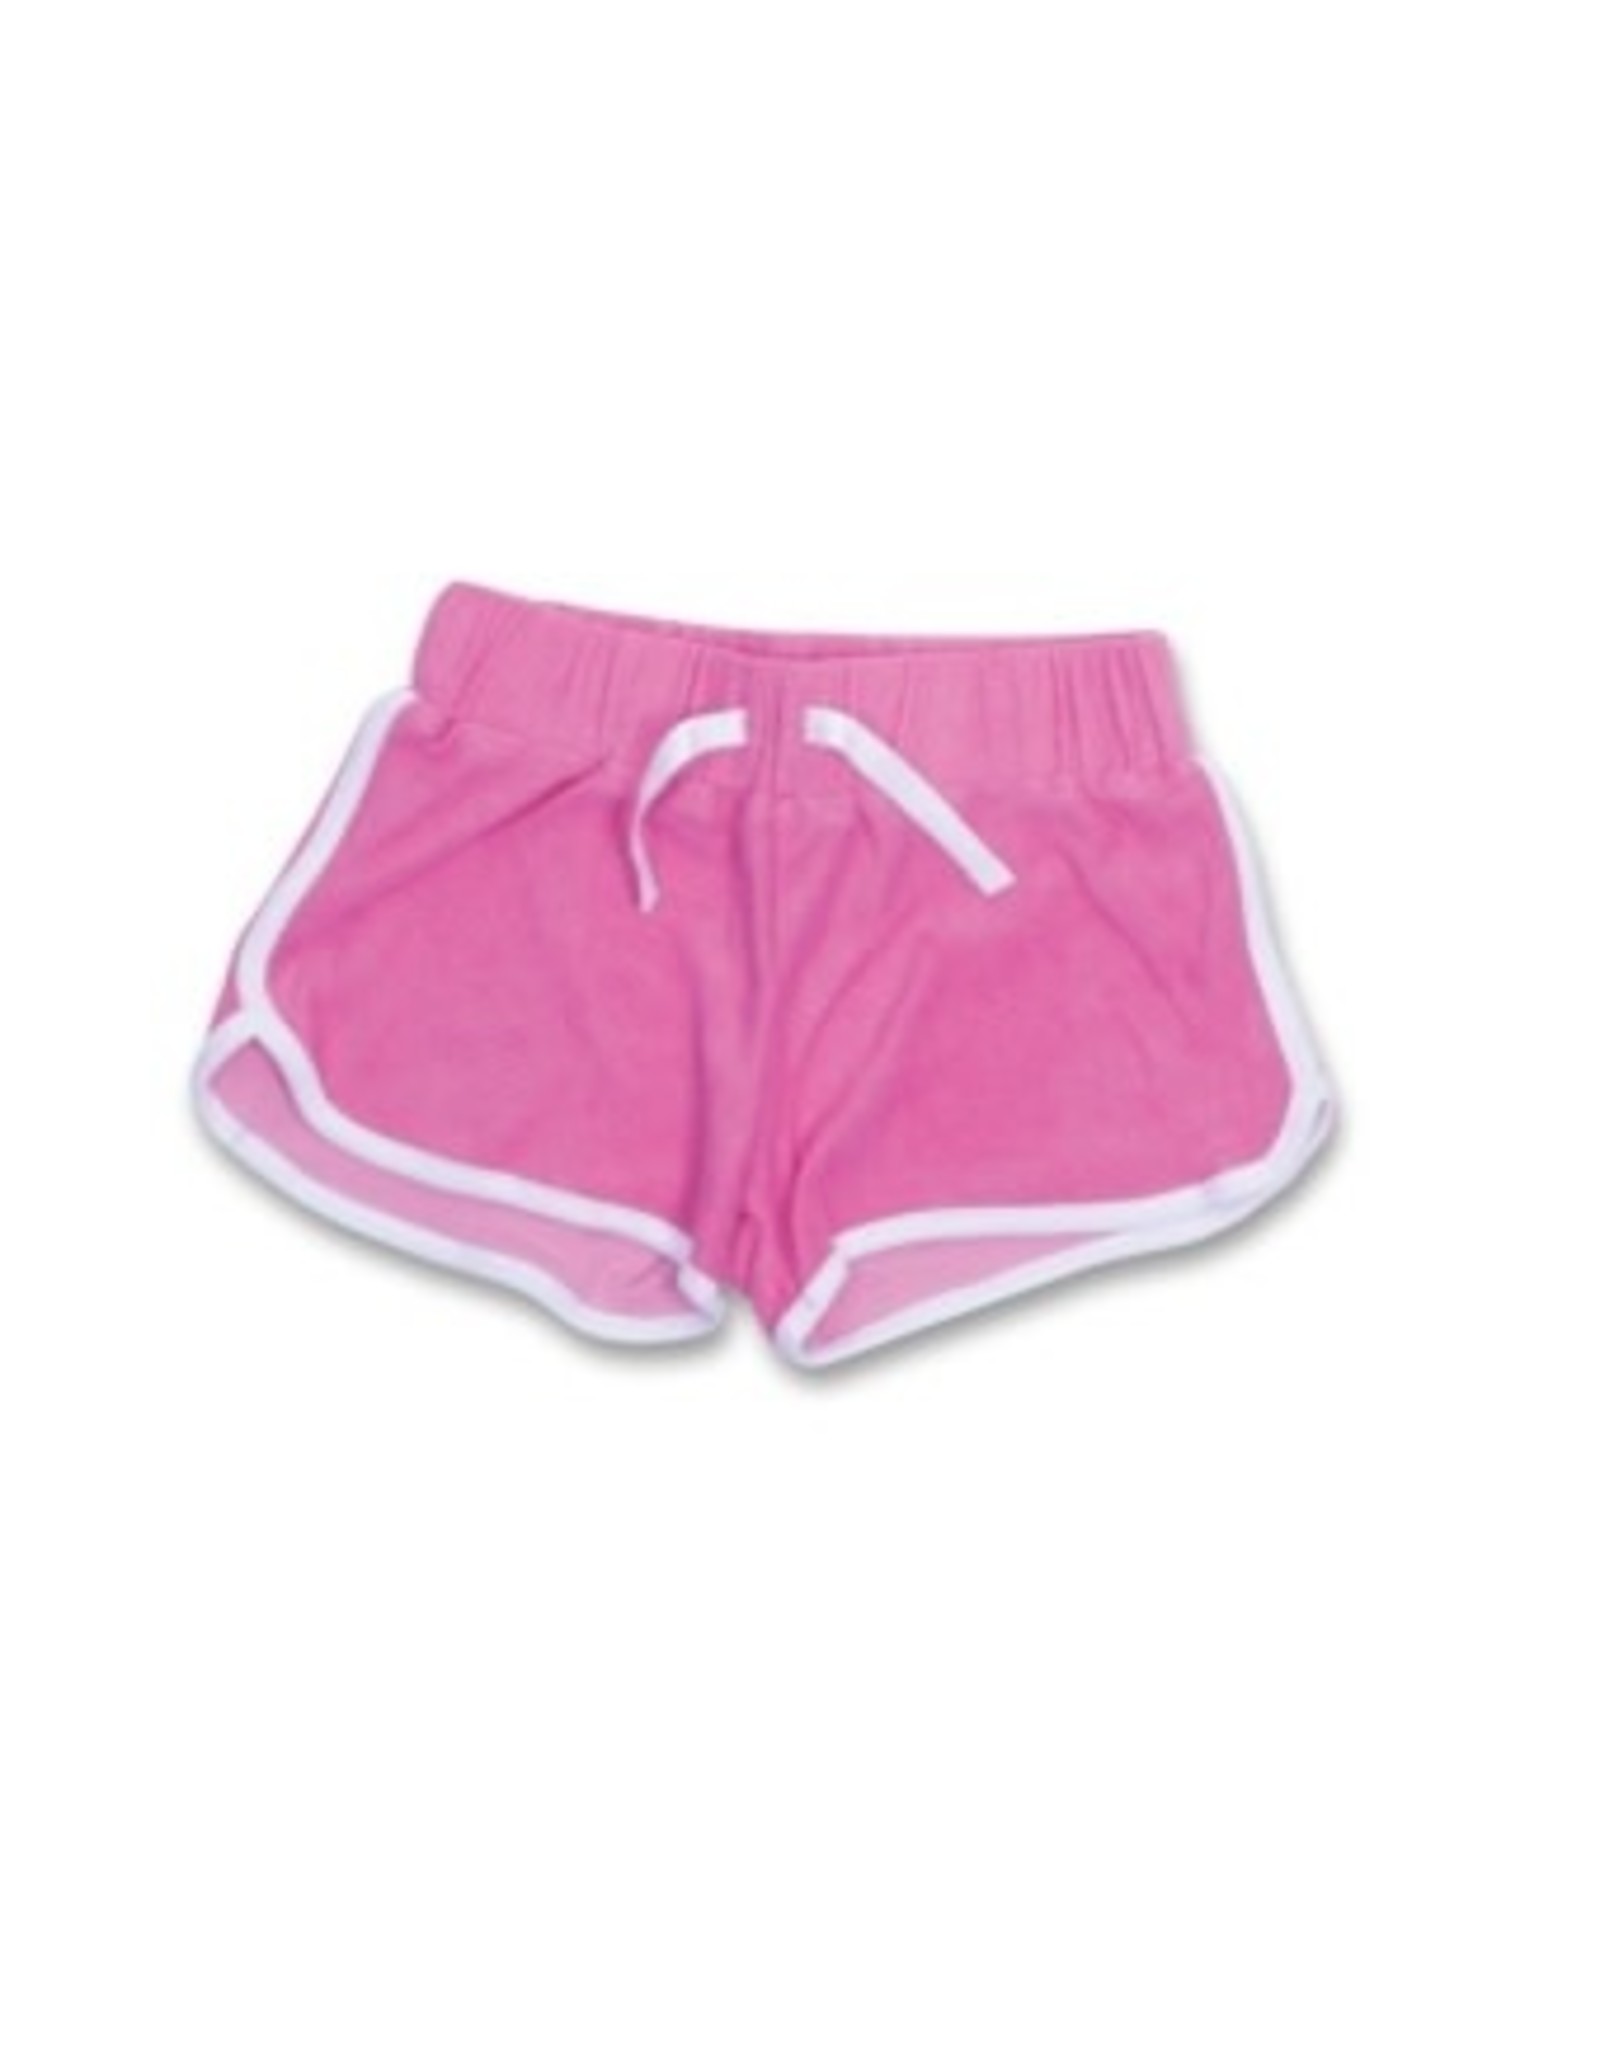 Shade Critters terry drawstring shorts - pink